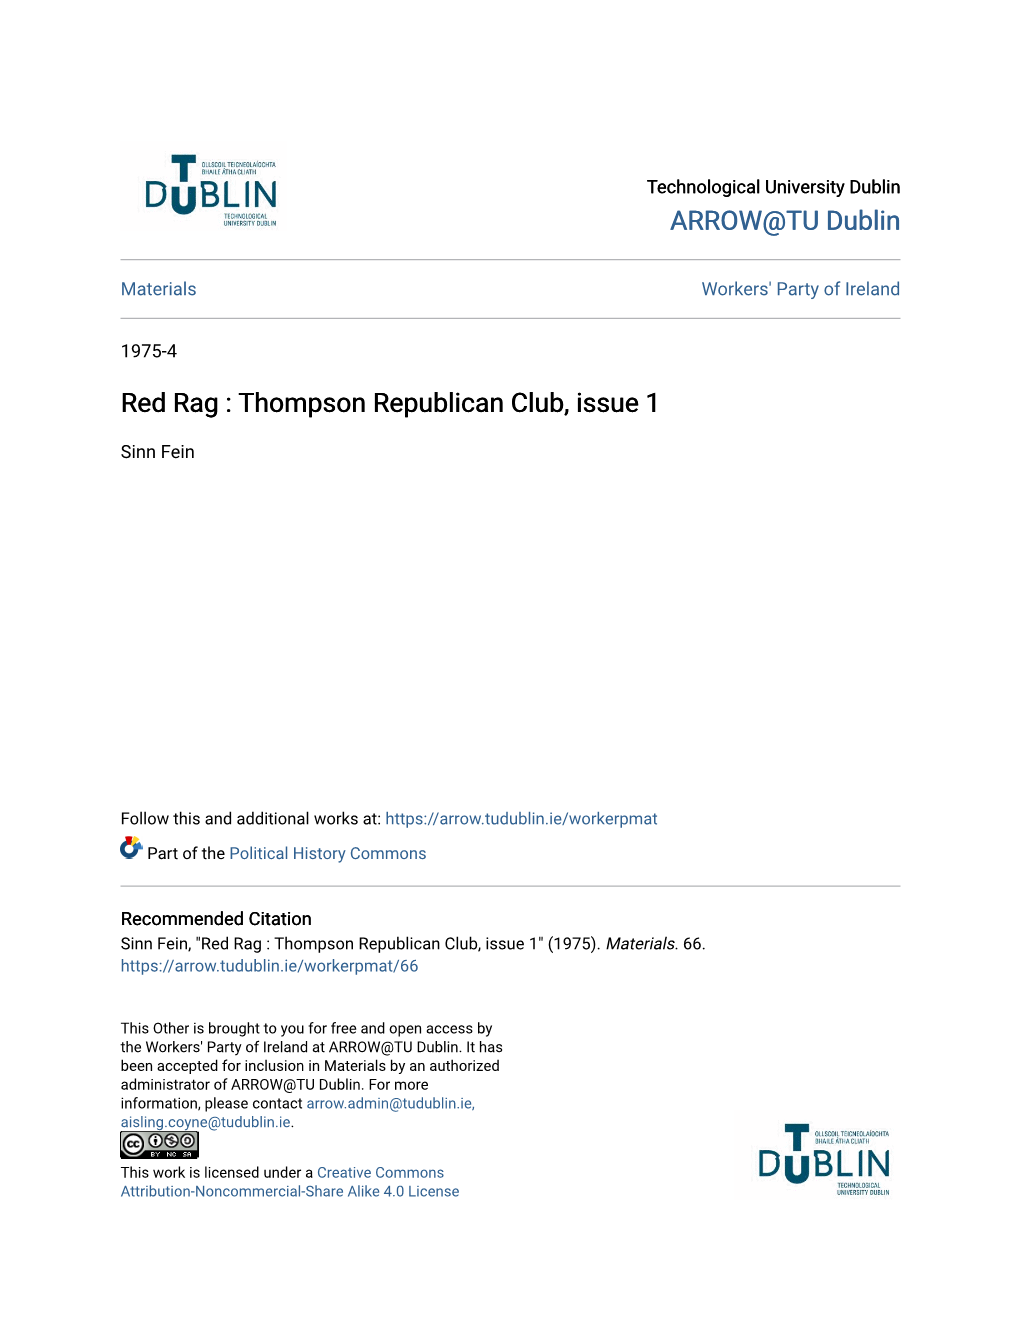 Thompson Republican Club, Issue 1